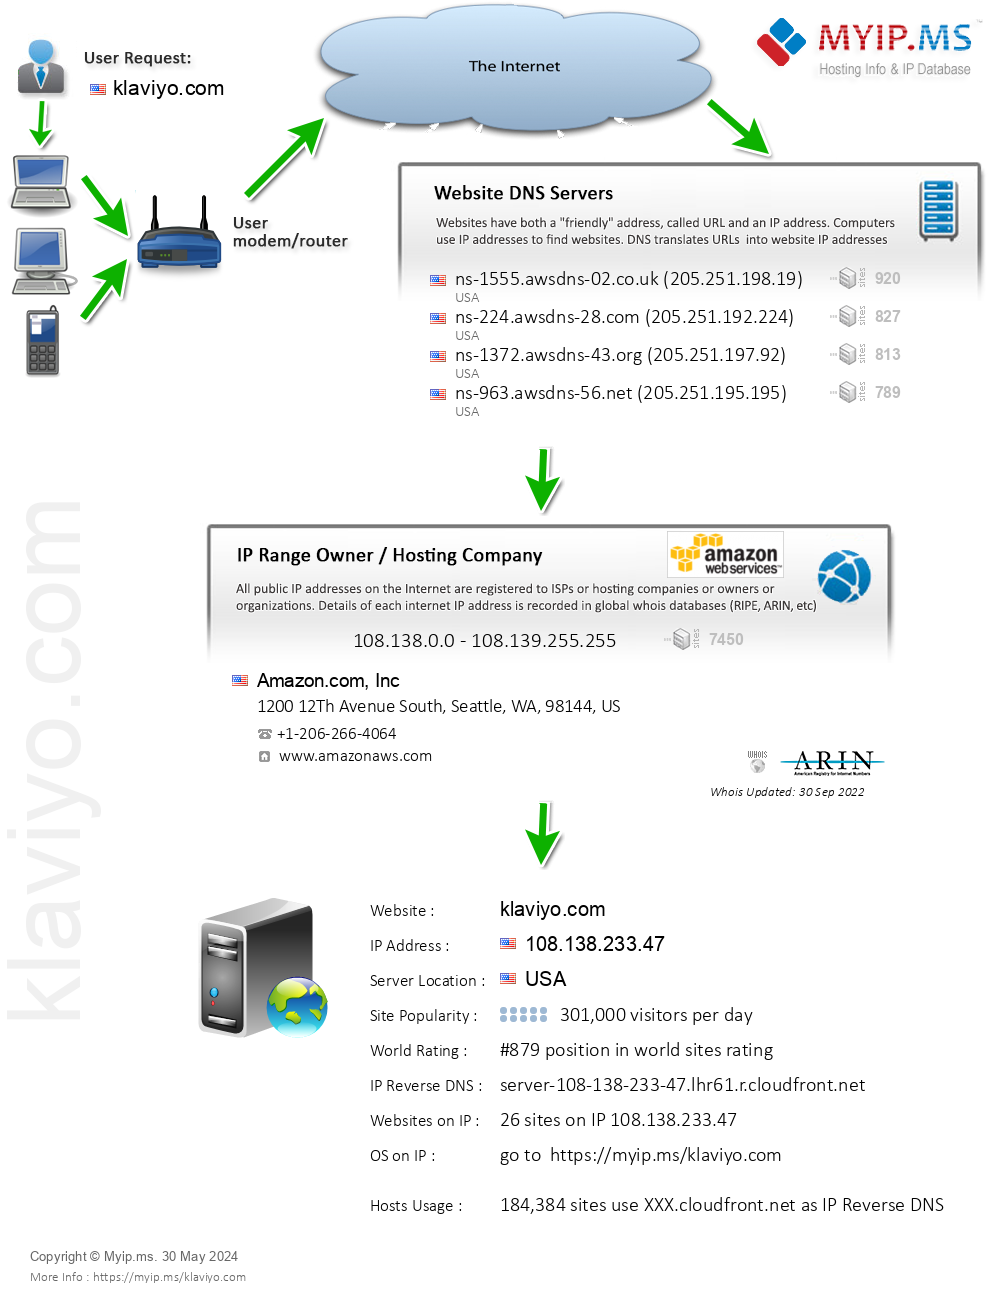 Klaviyo.com - Website Hosting Visual IP Diagram